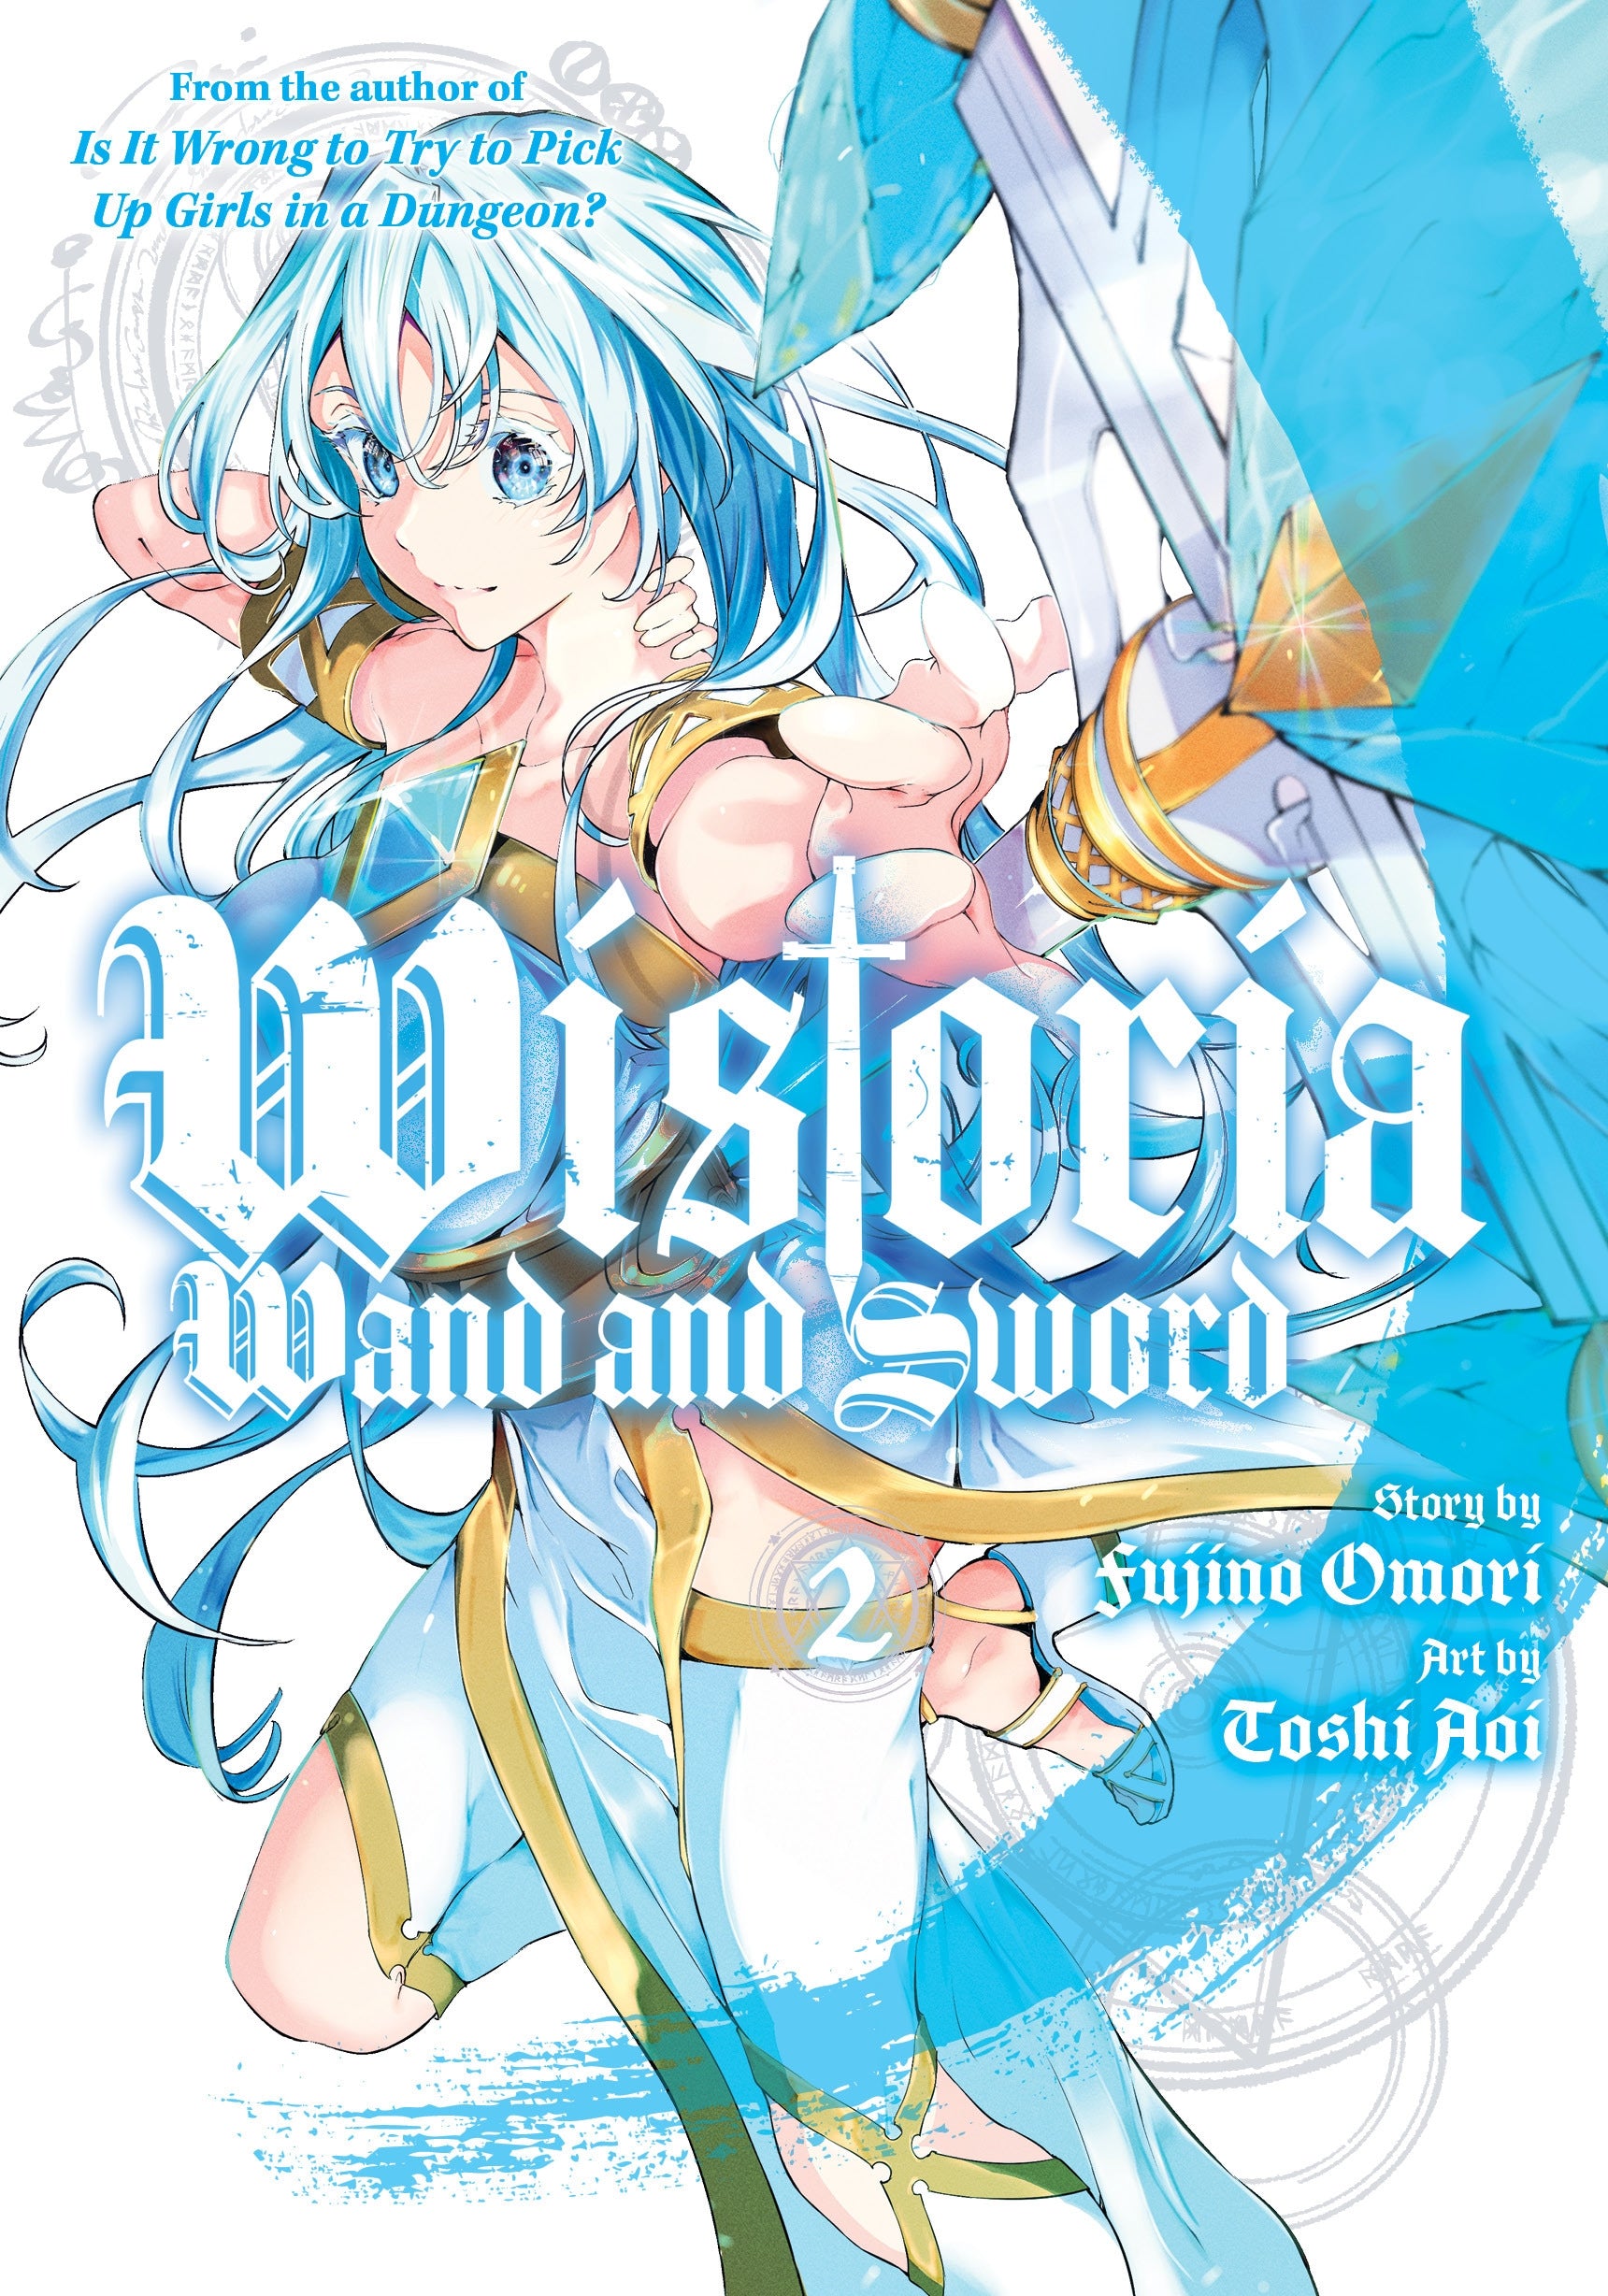 Wistoria Wand and Sword - Vol. 2